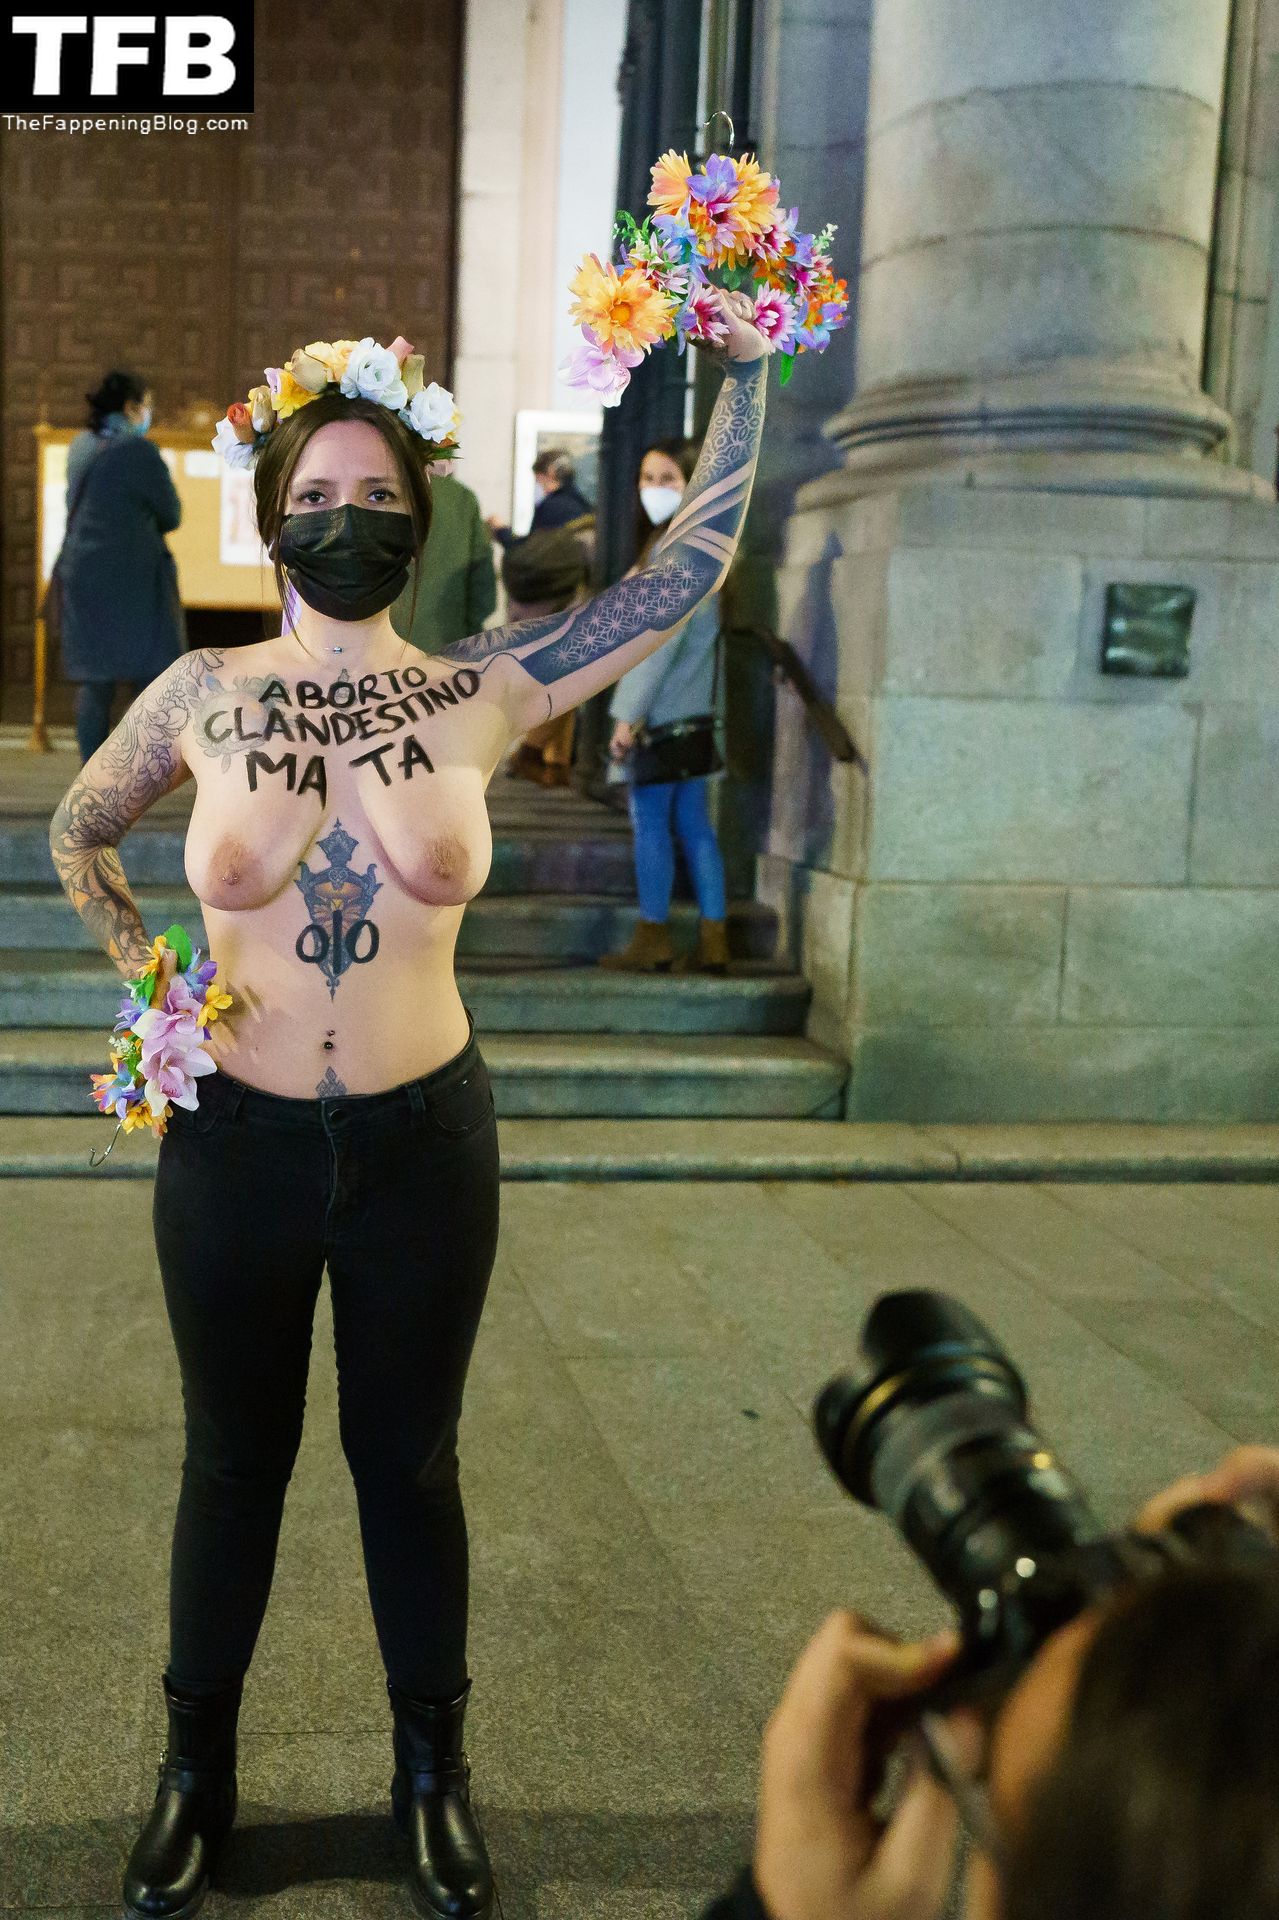 Femen-Nude-Protest-The-Fappening-Blog-6.jpg